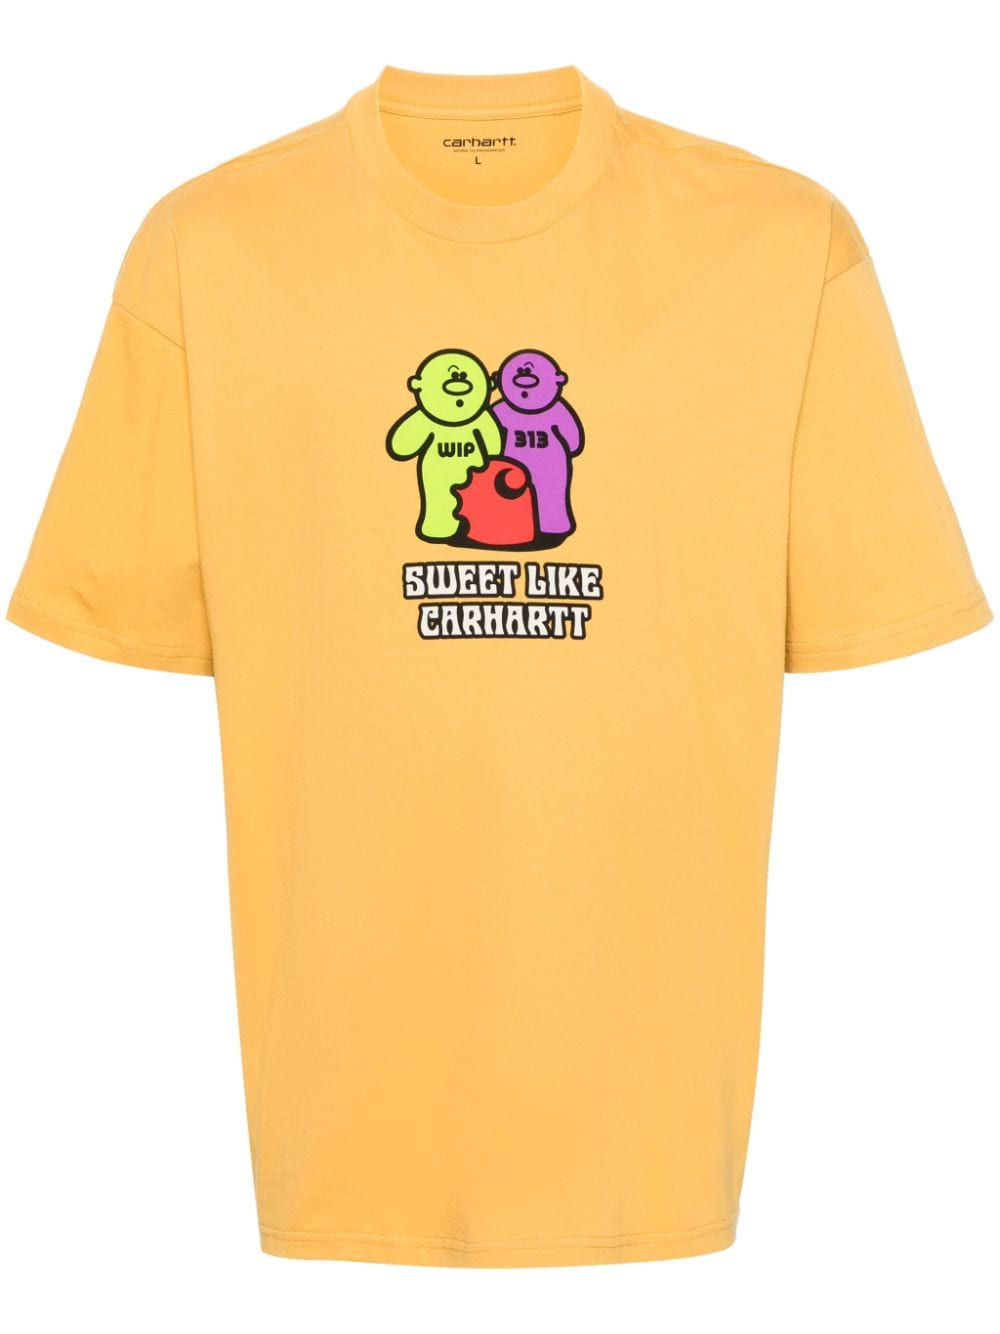 Gummy-print cotton T-shirt